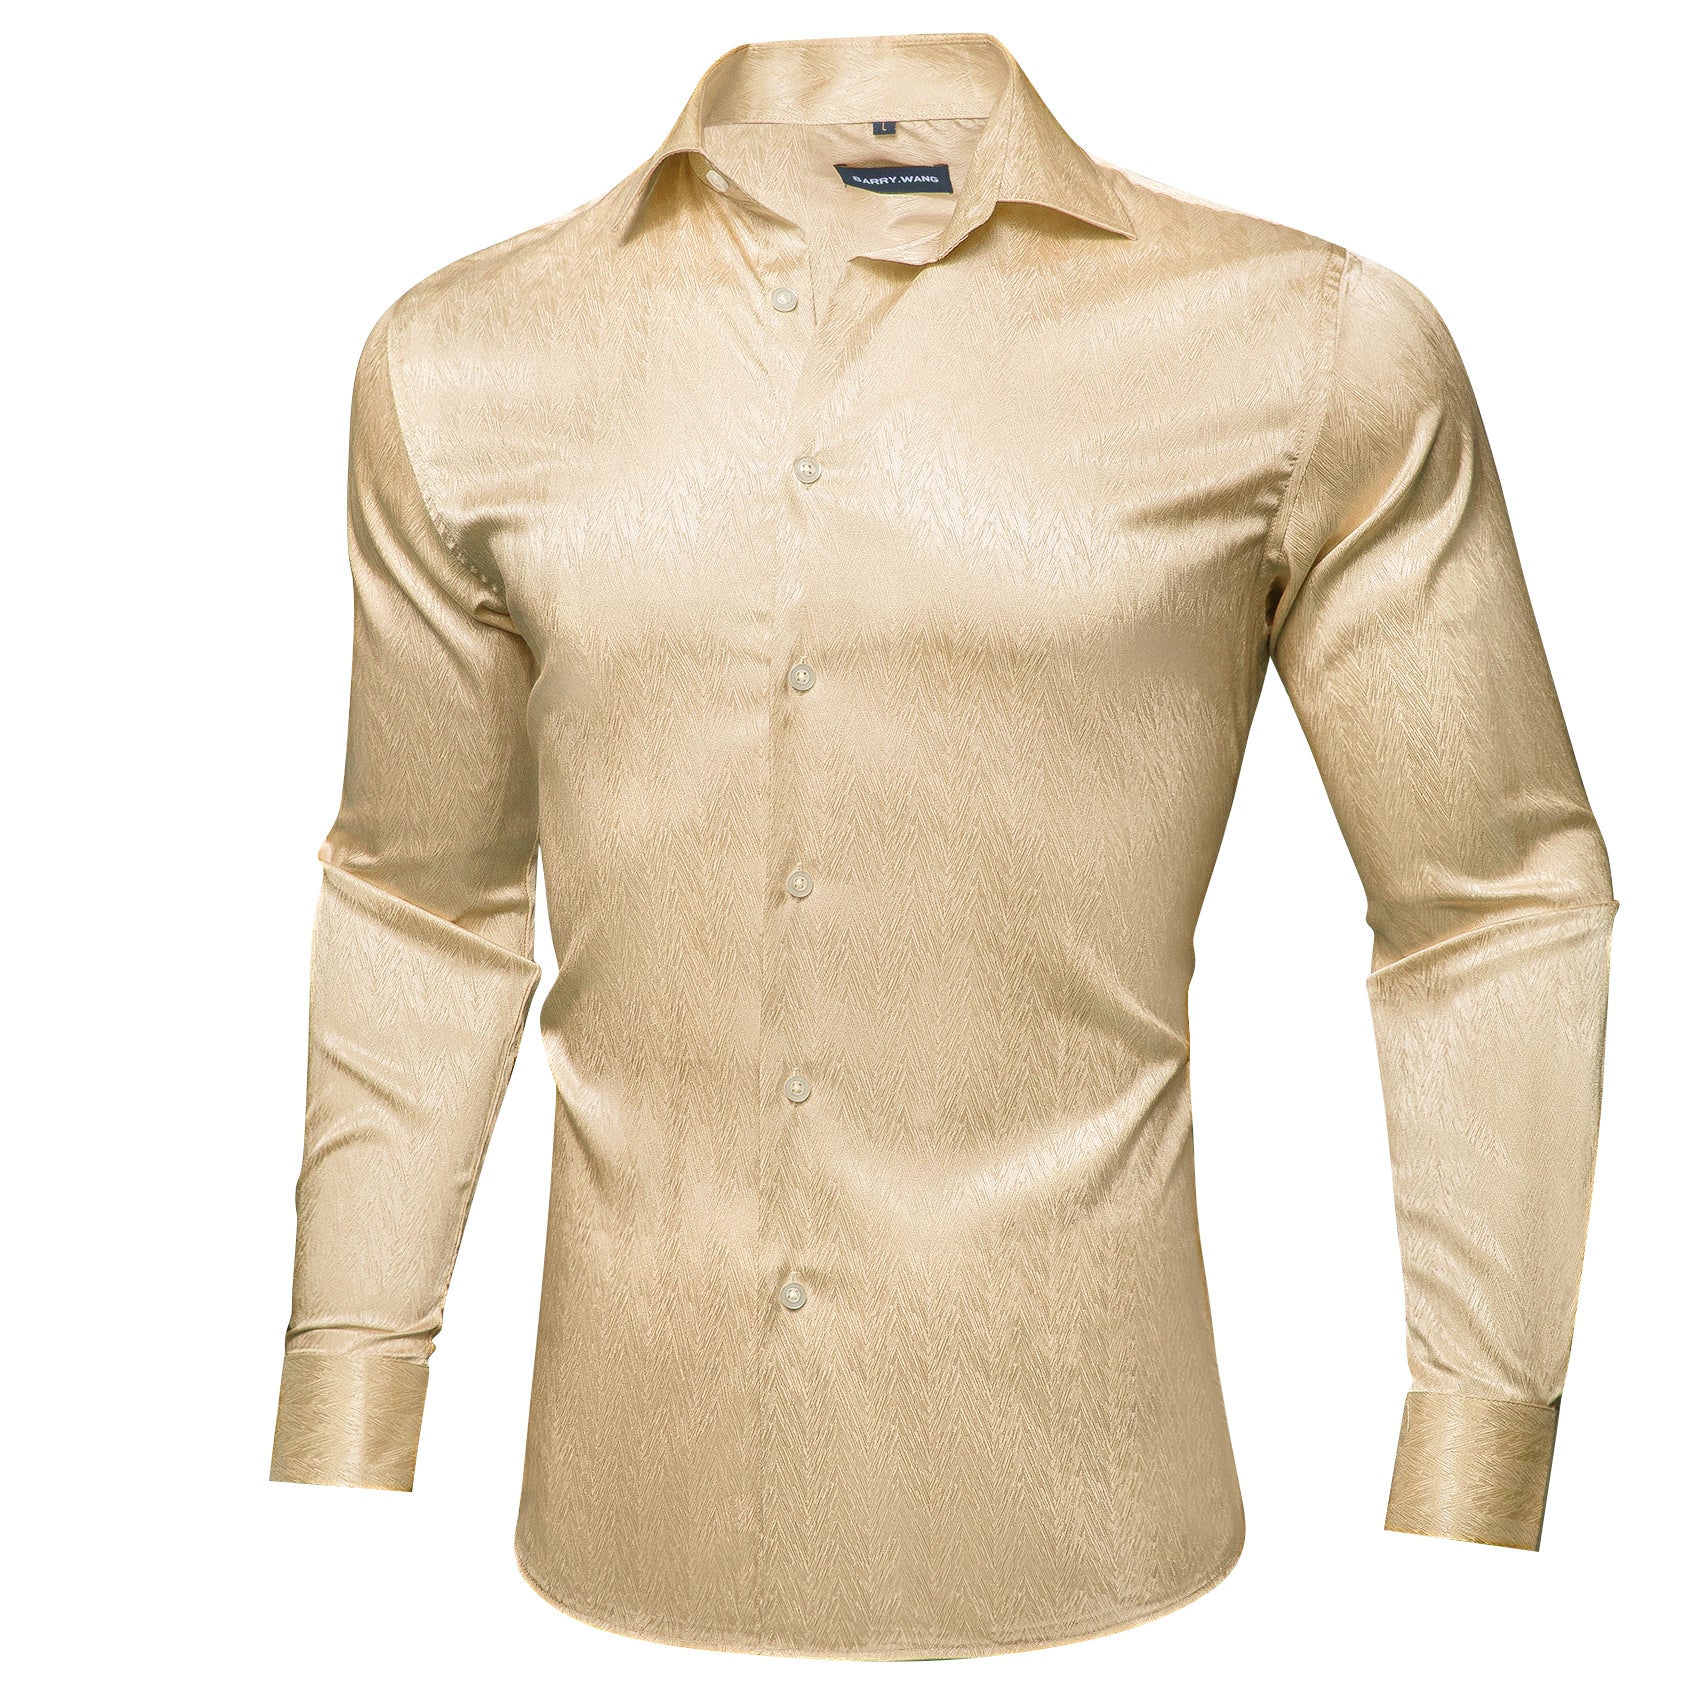 Barry.wang Fashion Champagne Solid Silk Shirt